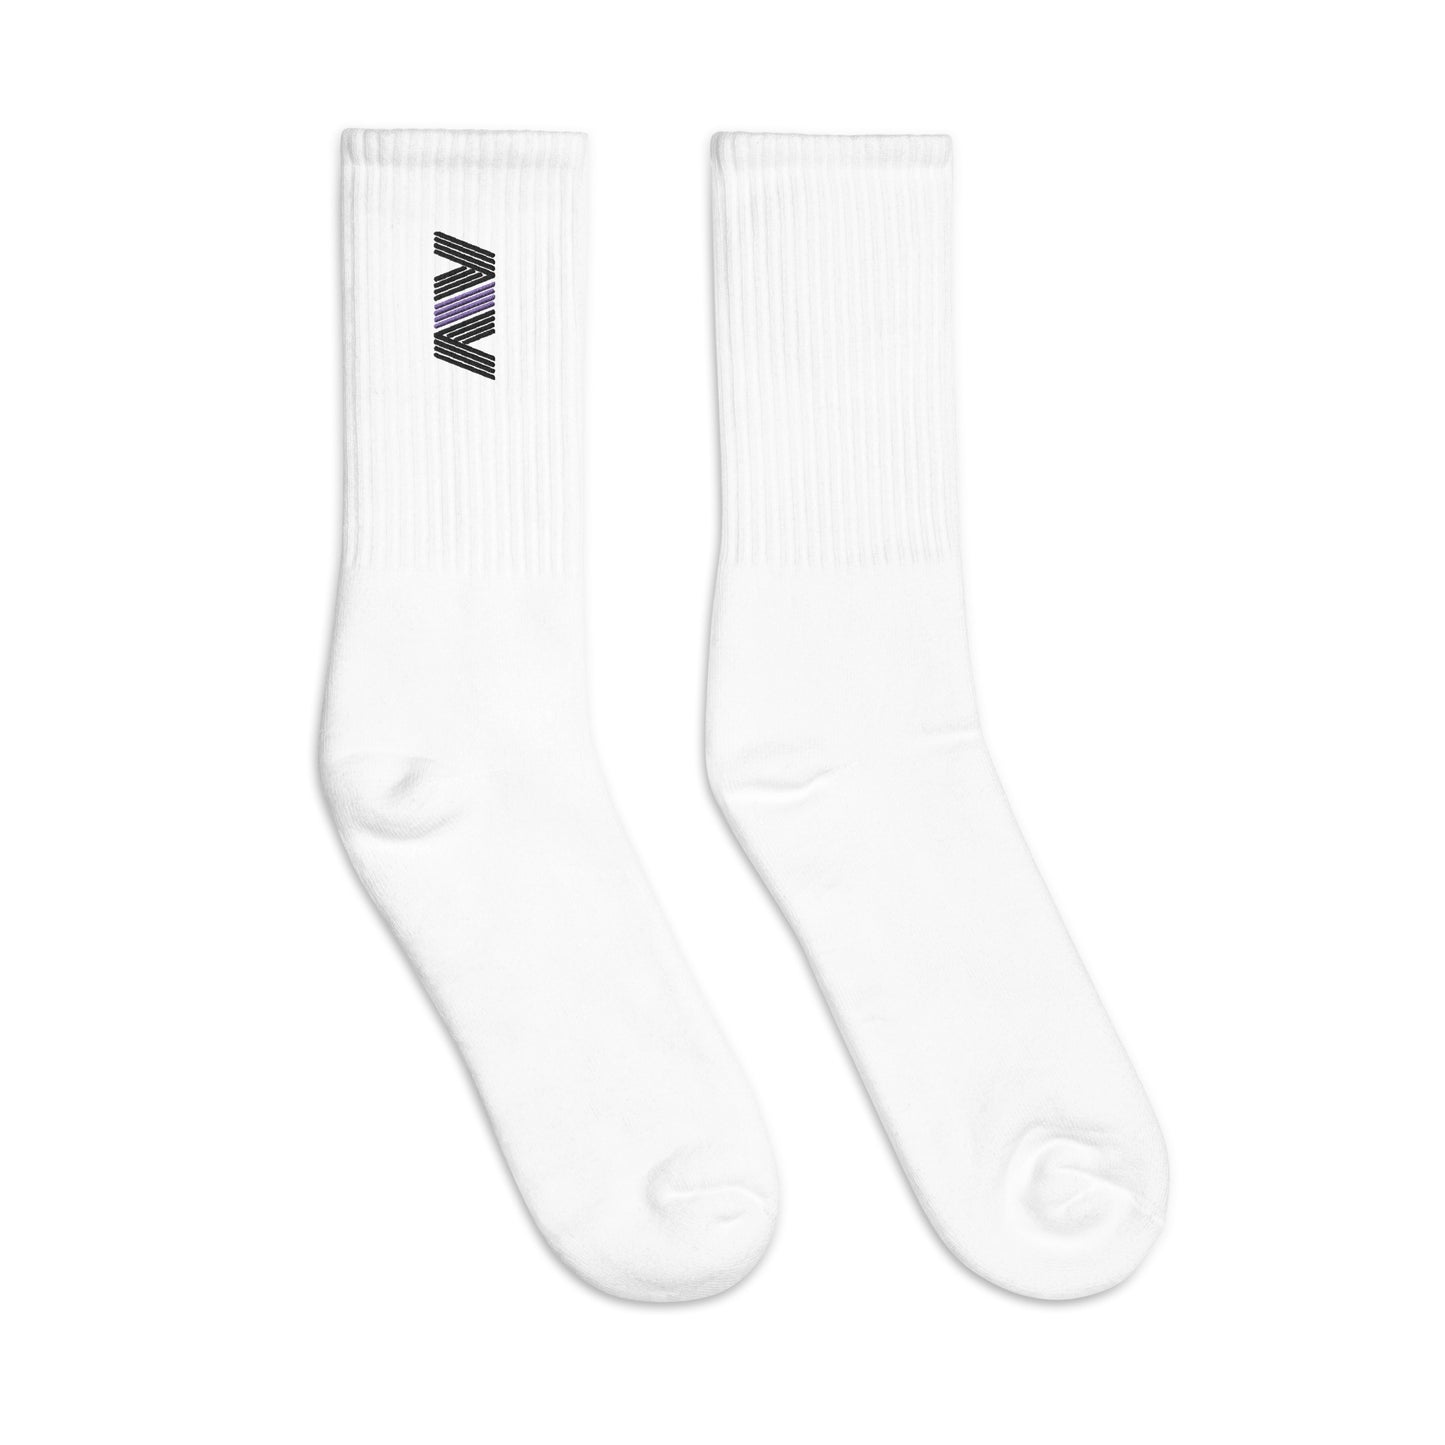 A4 Socks - White